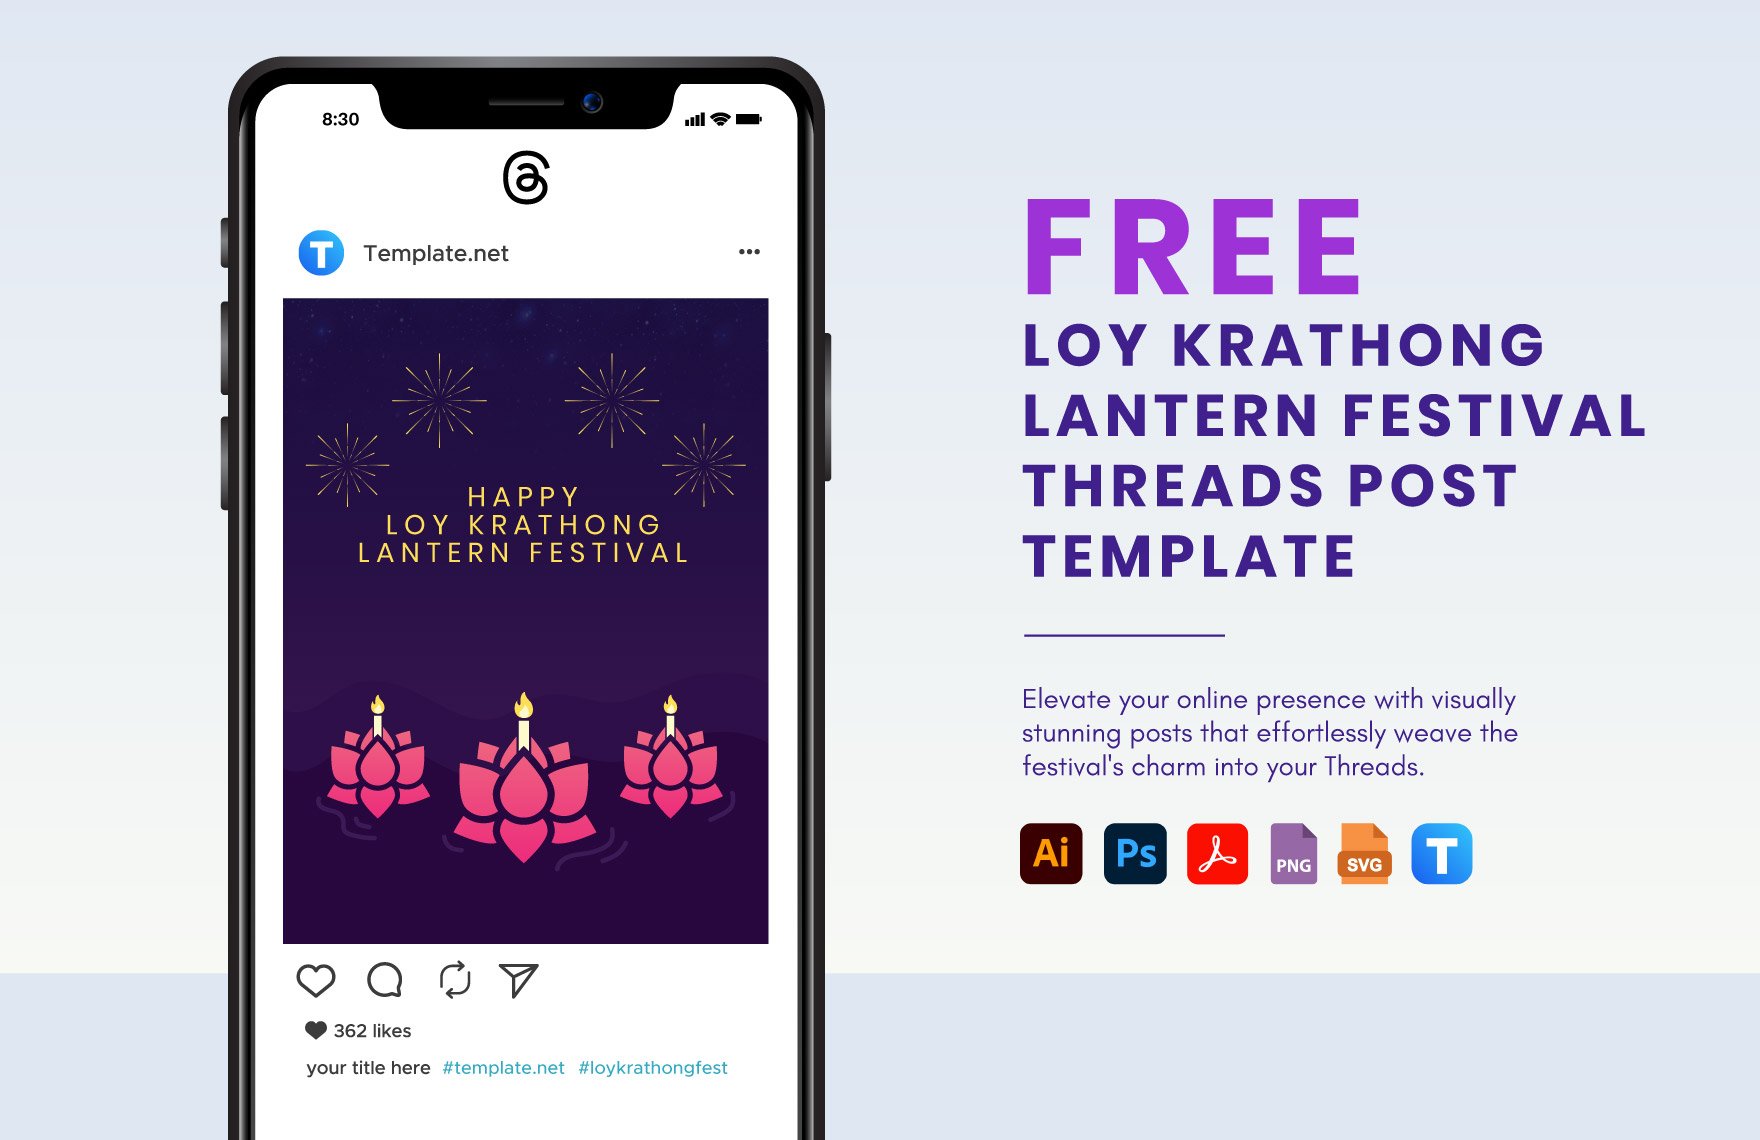 Loy Krathong Lantern Festival Threads Post Template